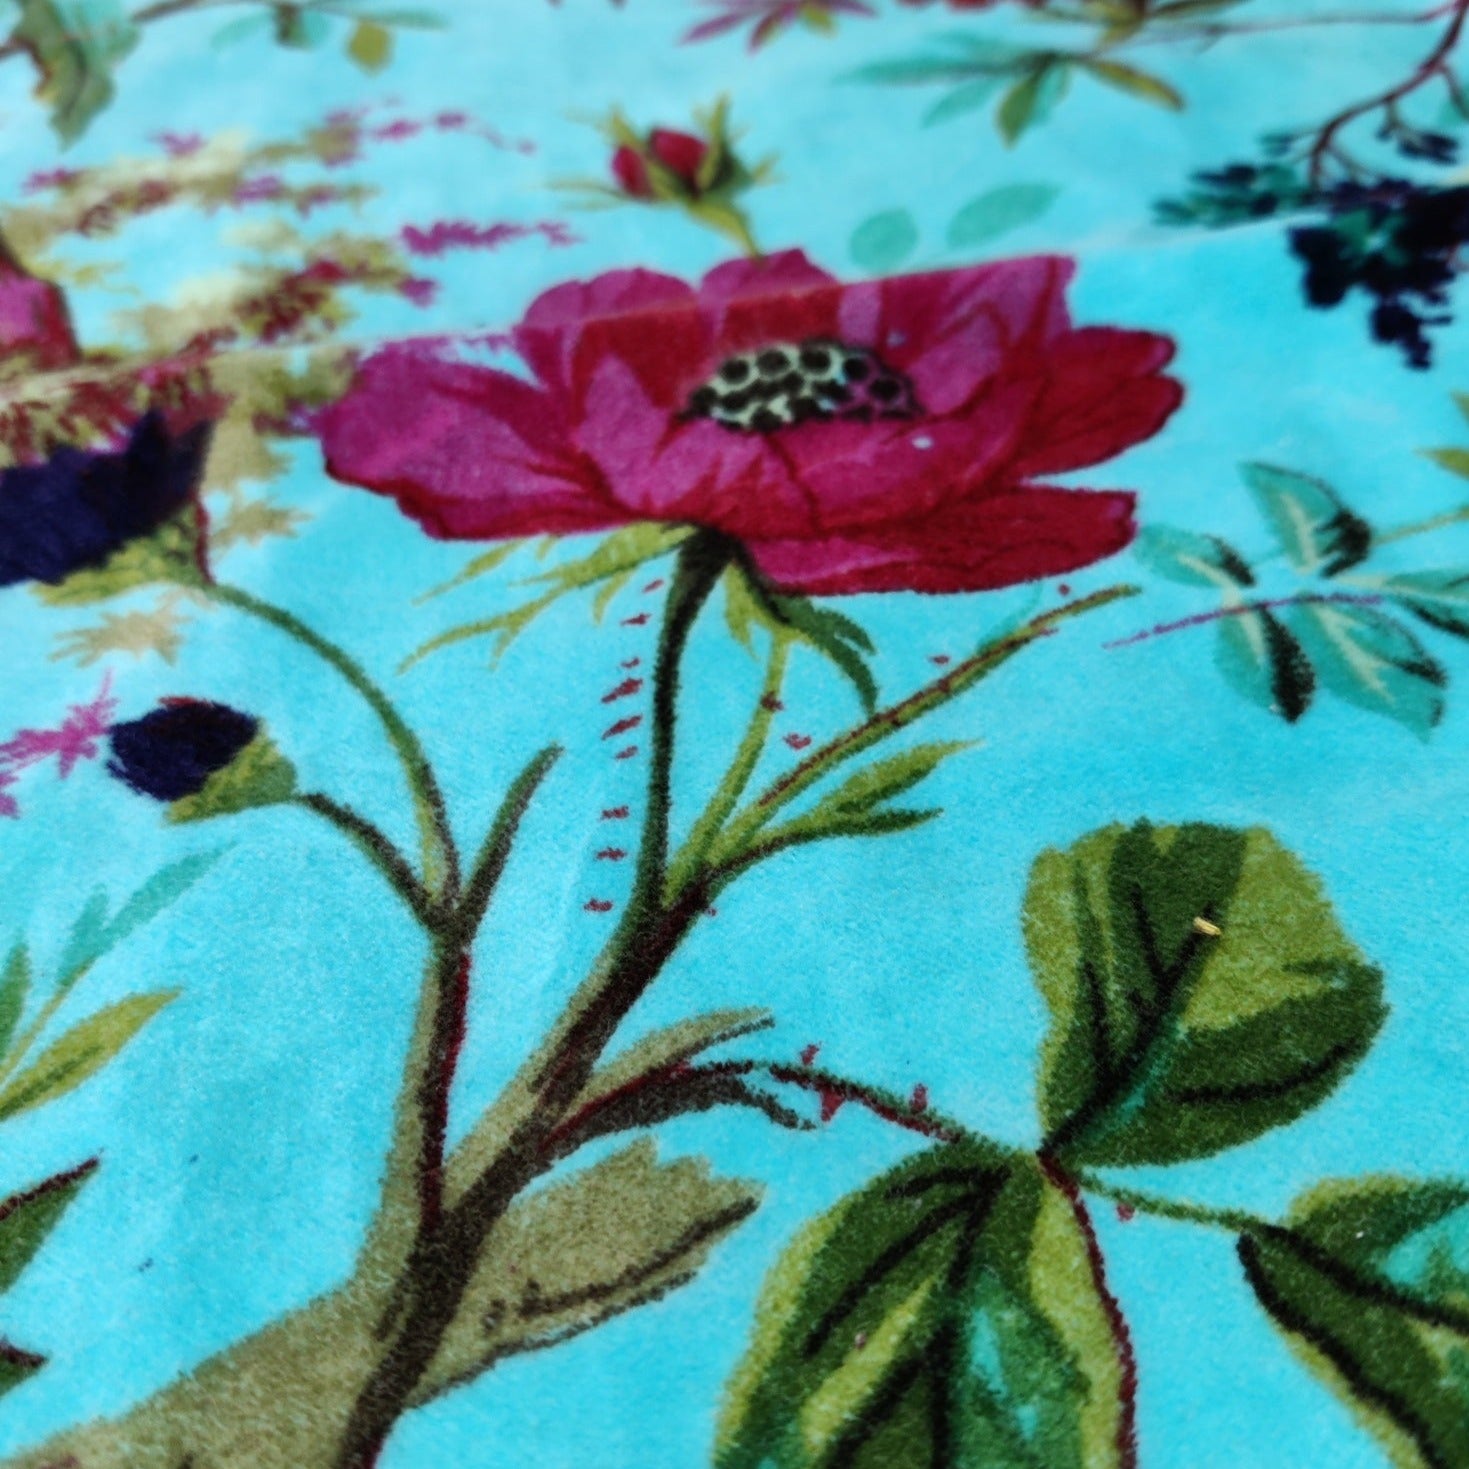 Velvet fabric Birds of Paradise for upholstery- Sky Blue - The Teal Thread